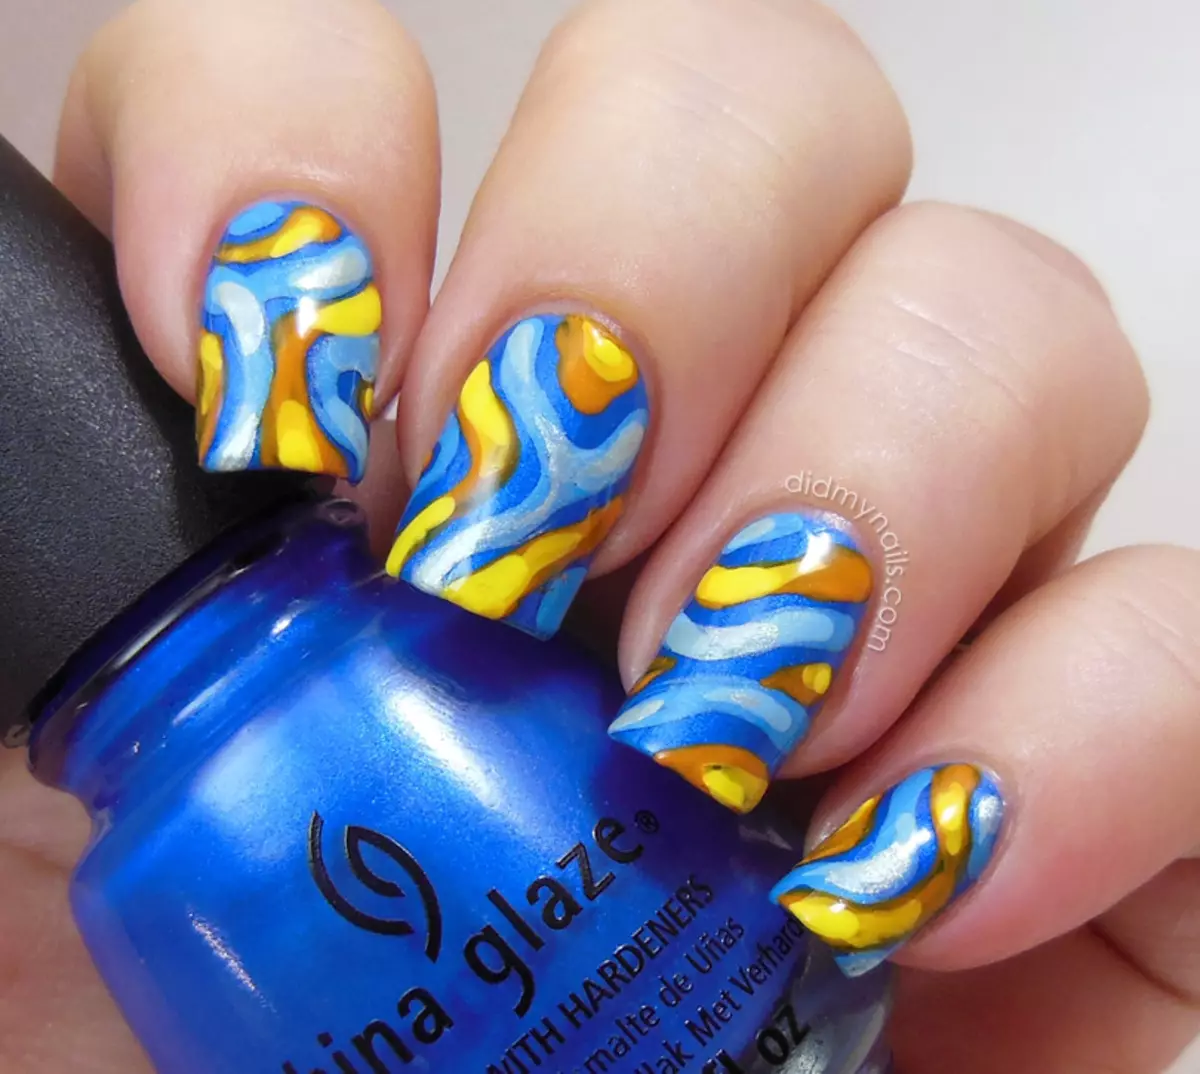 Manicura azul-amarela (51 fotos): ideas de deseño de uñas en tons amarelos e azuis 24468_6